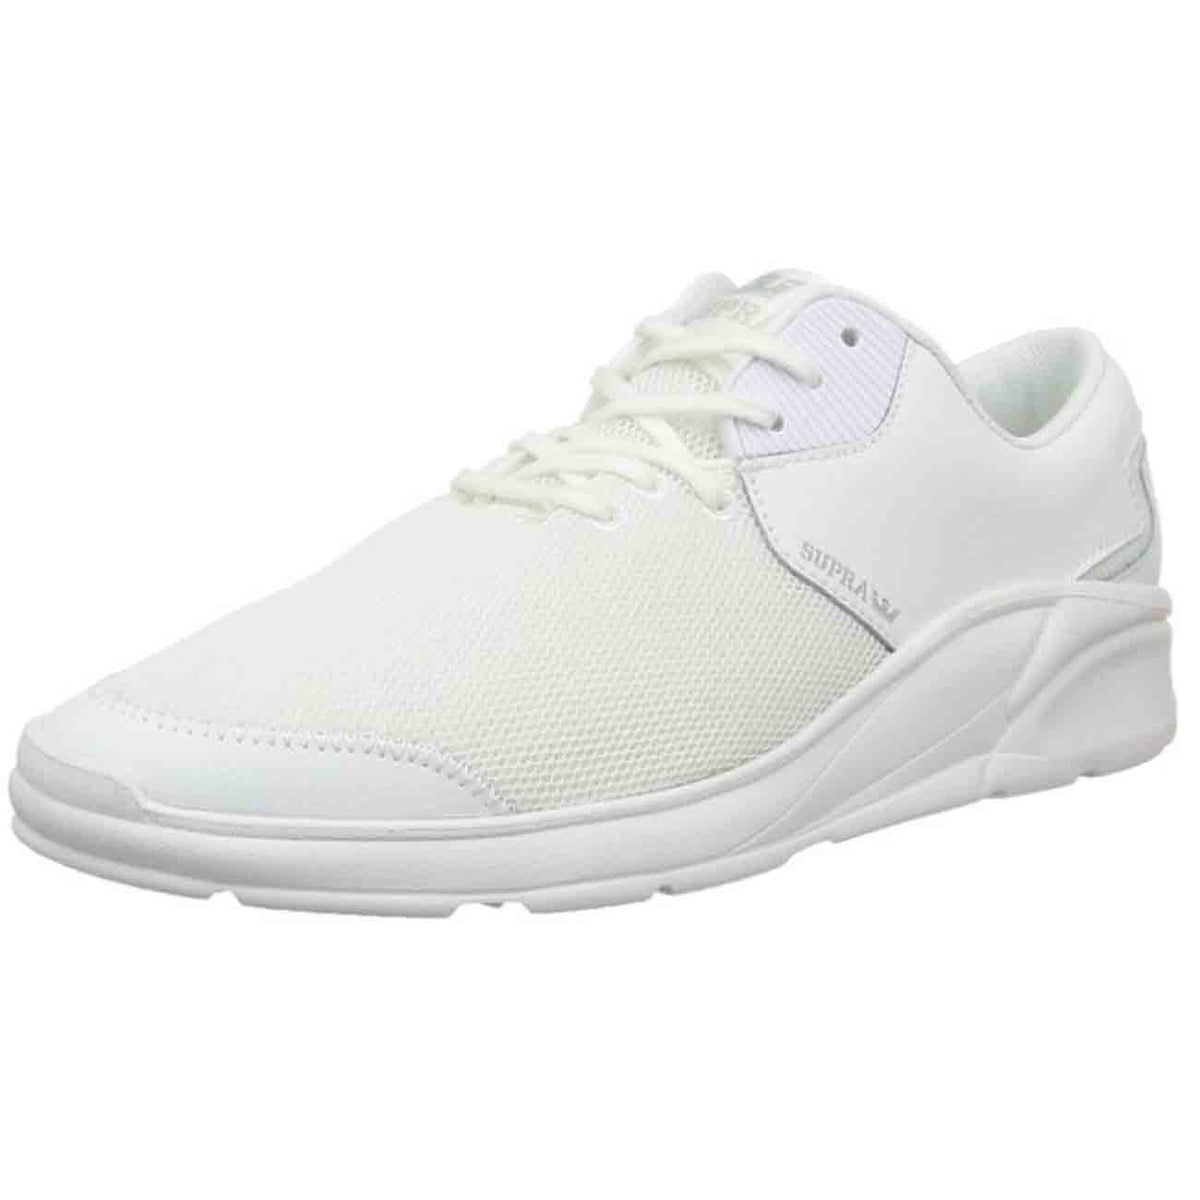 Supra Womens Noiz Low Mesh Fashion Sneaker Shoes White S56002